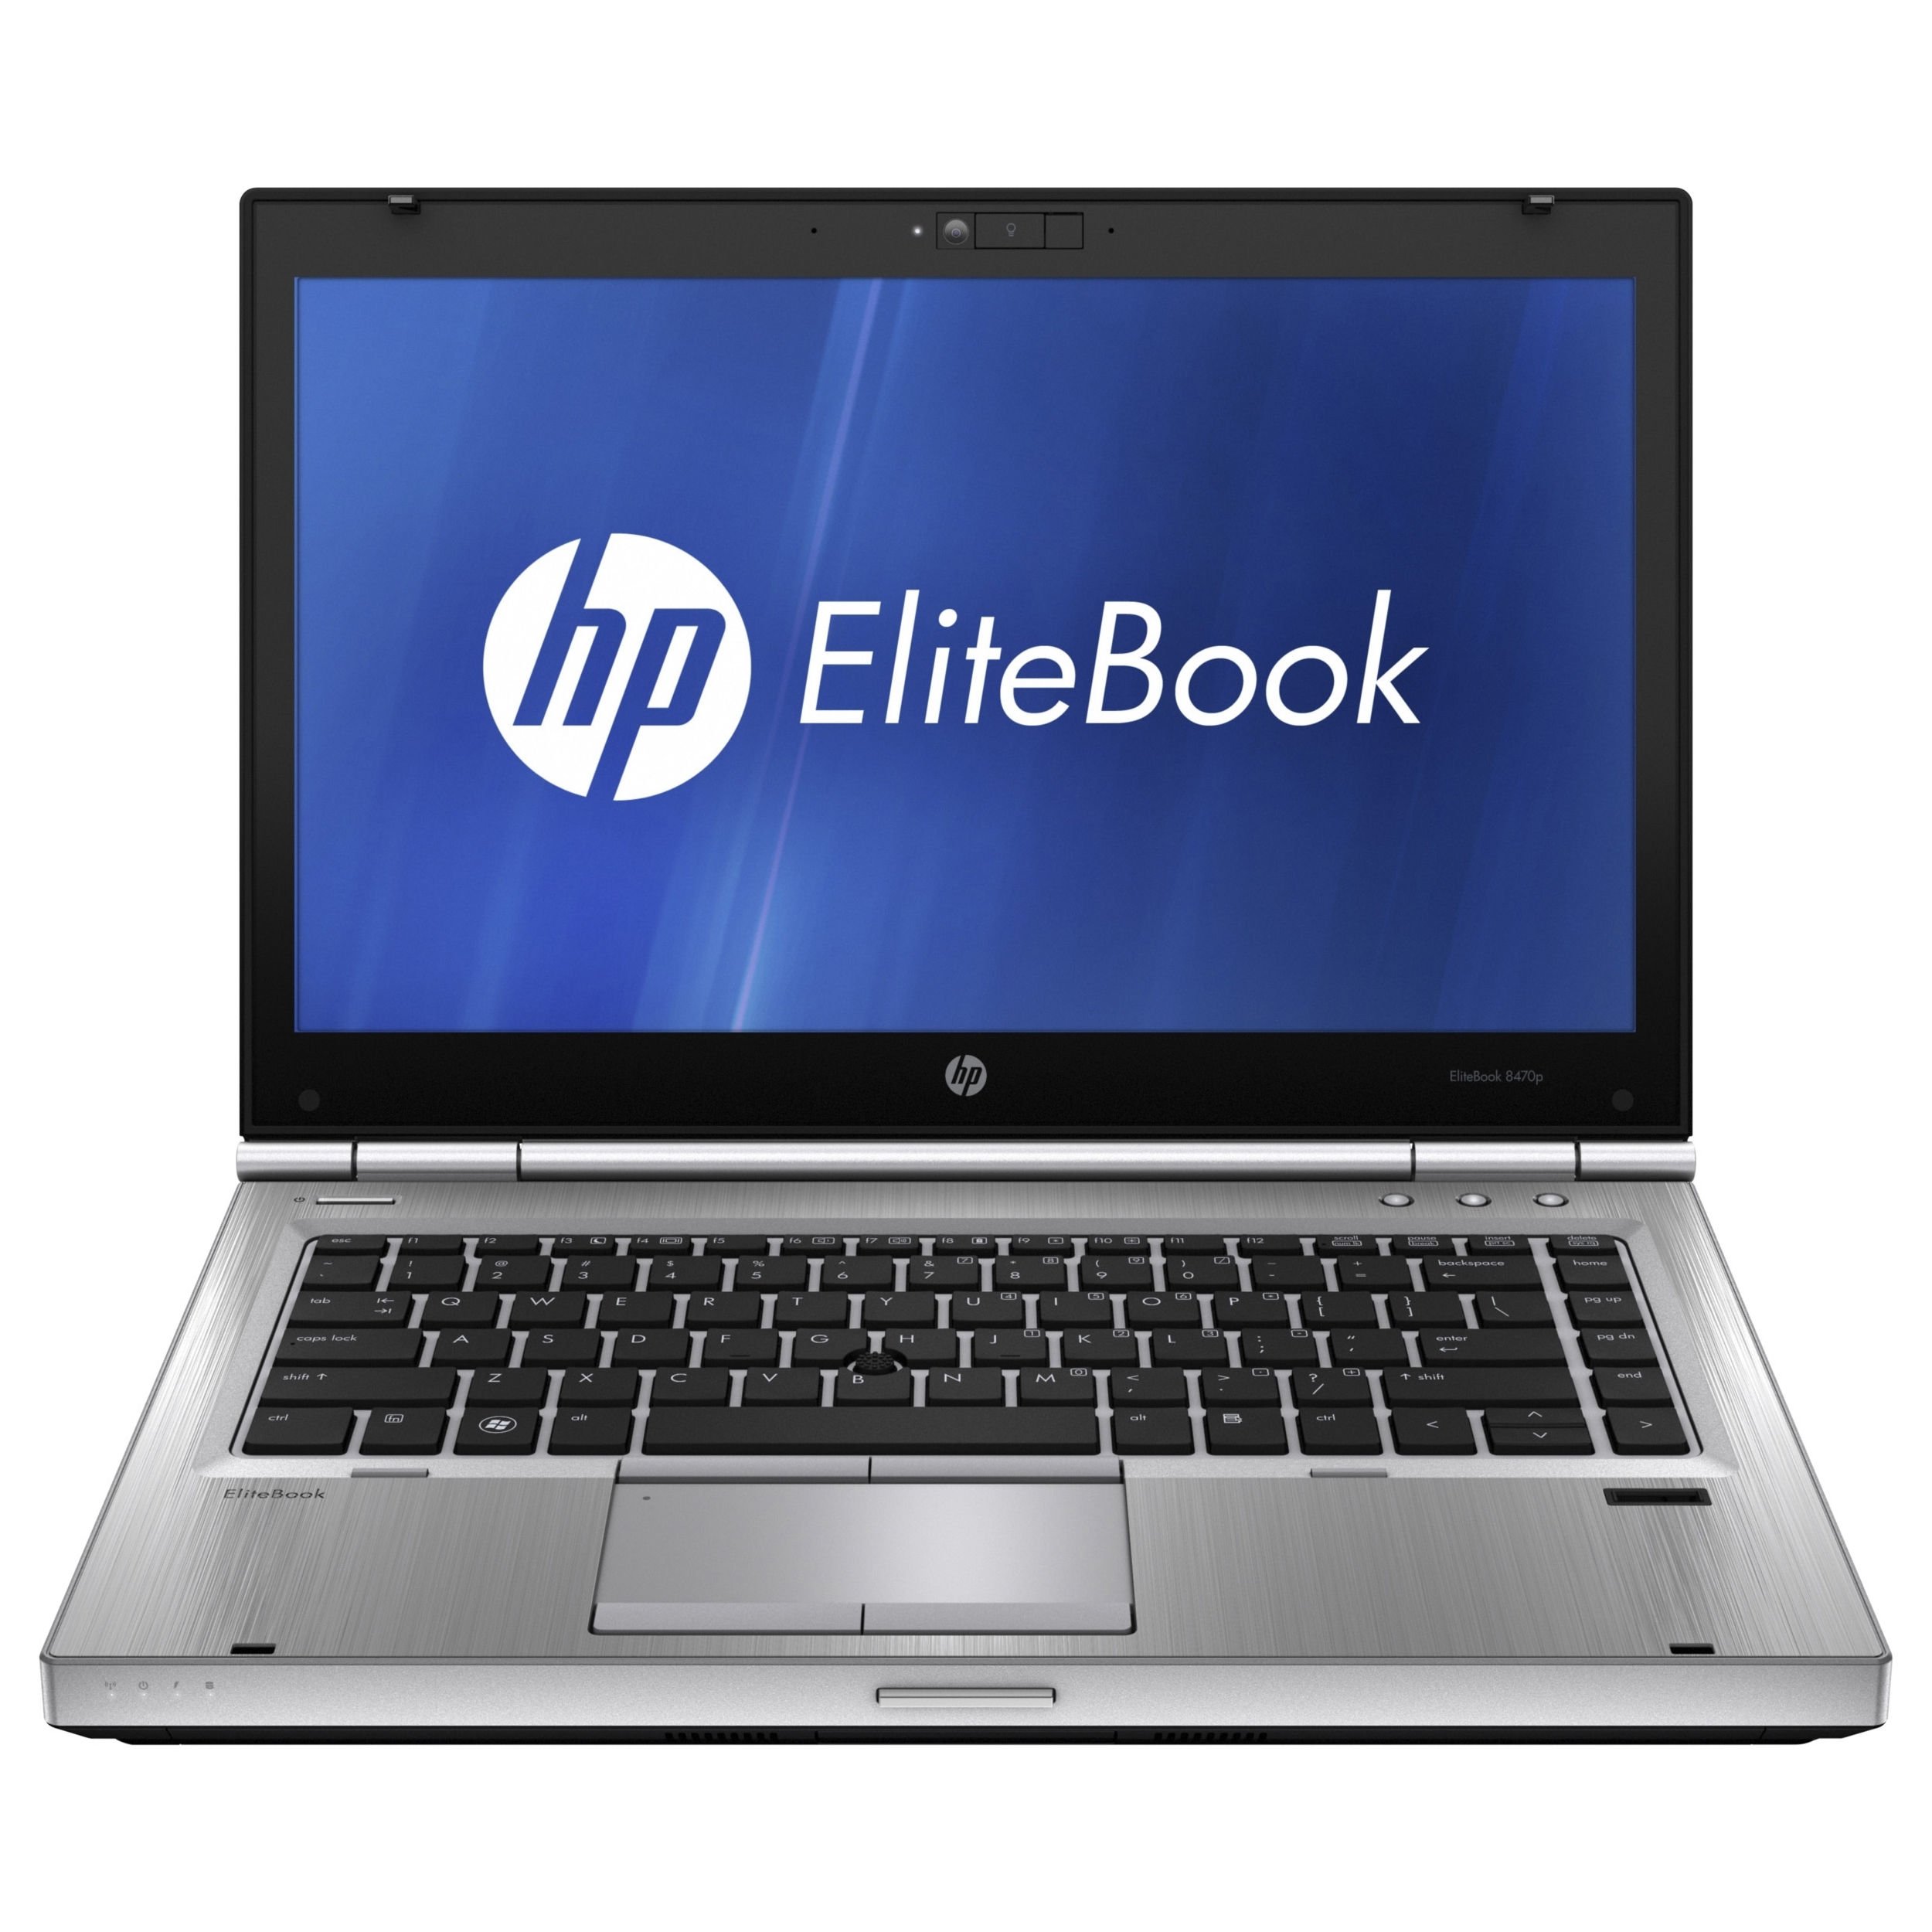 HP Elitebook 8470p, 3rd Gen Intel Core i5 3320, 2.6GHz, 8GB, 320GB HDD, DVD, 14in, Windows 10 Pro 64 (Renewed)